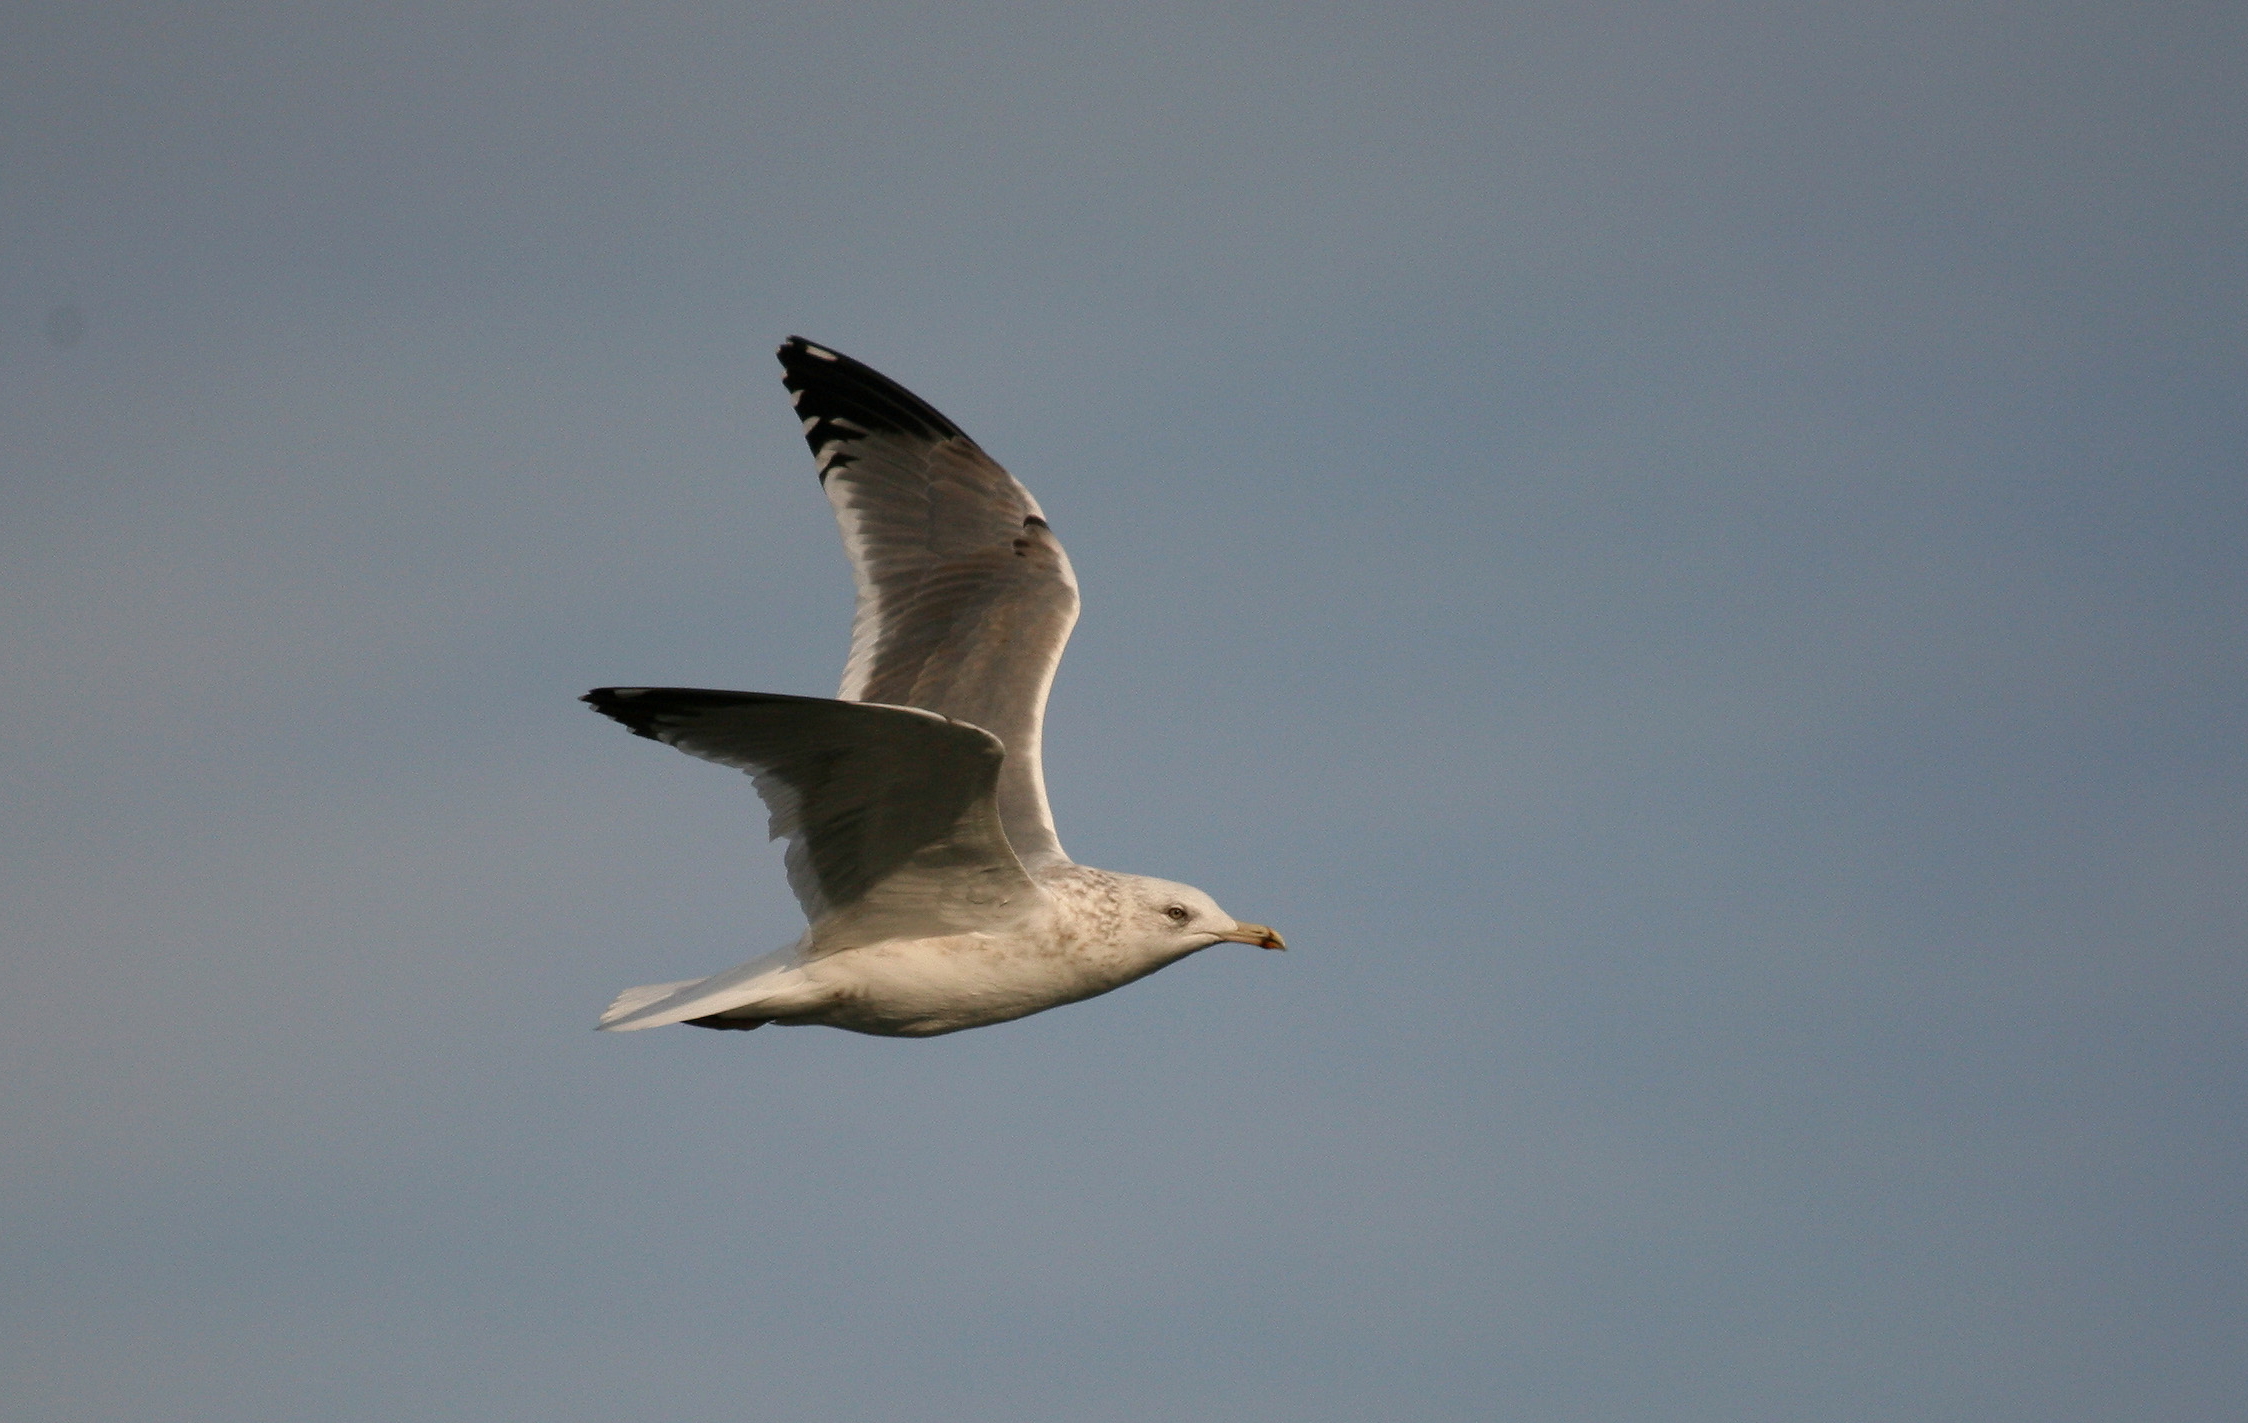 a small white bird flying through the air